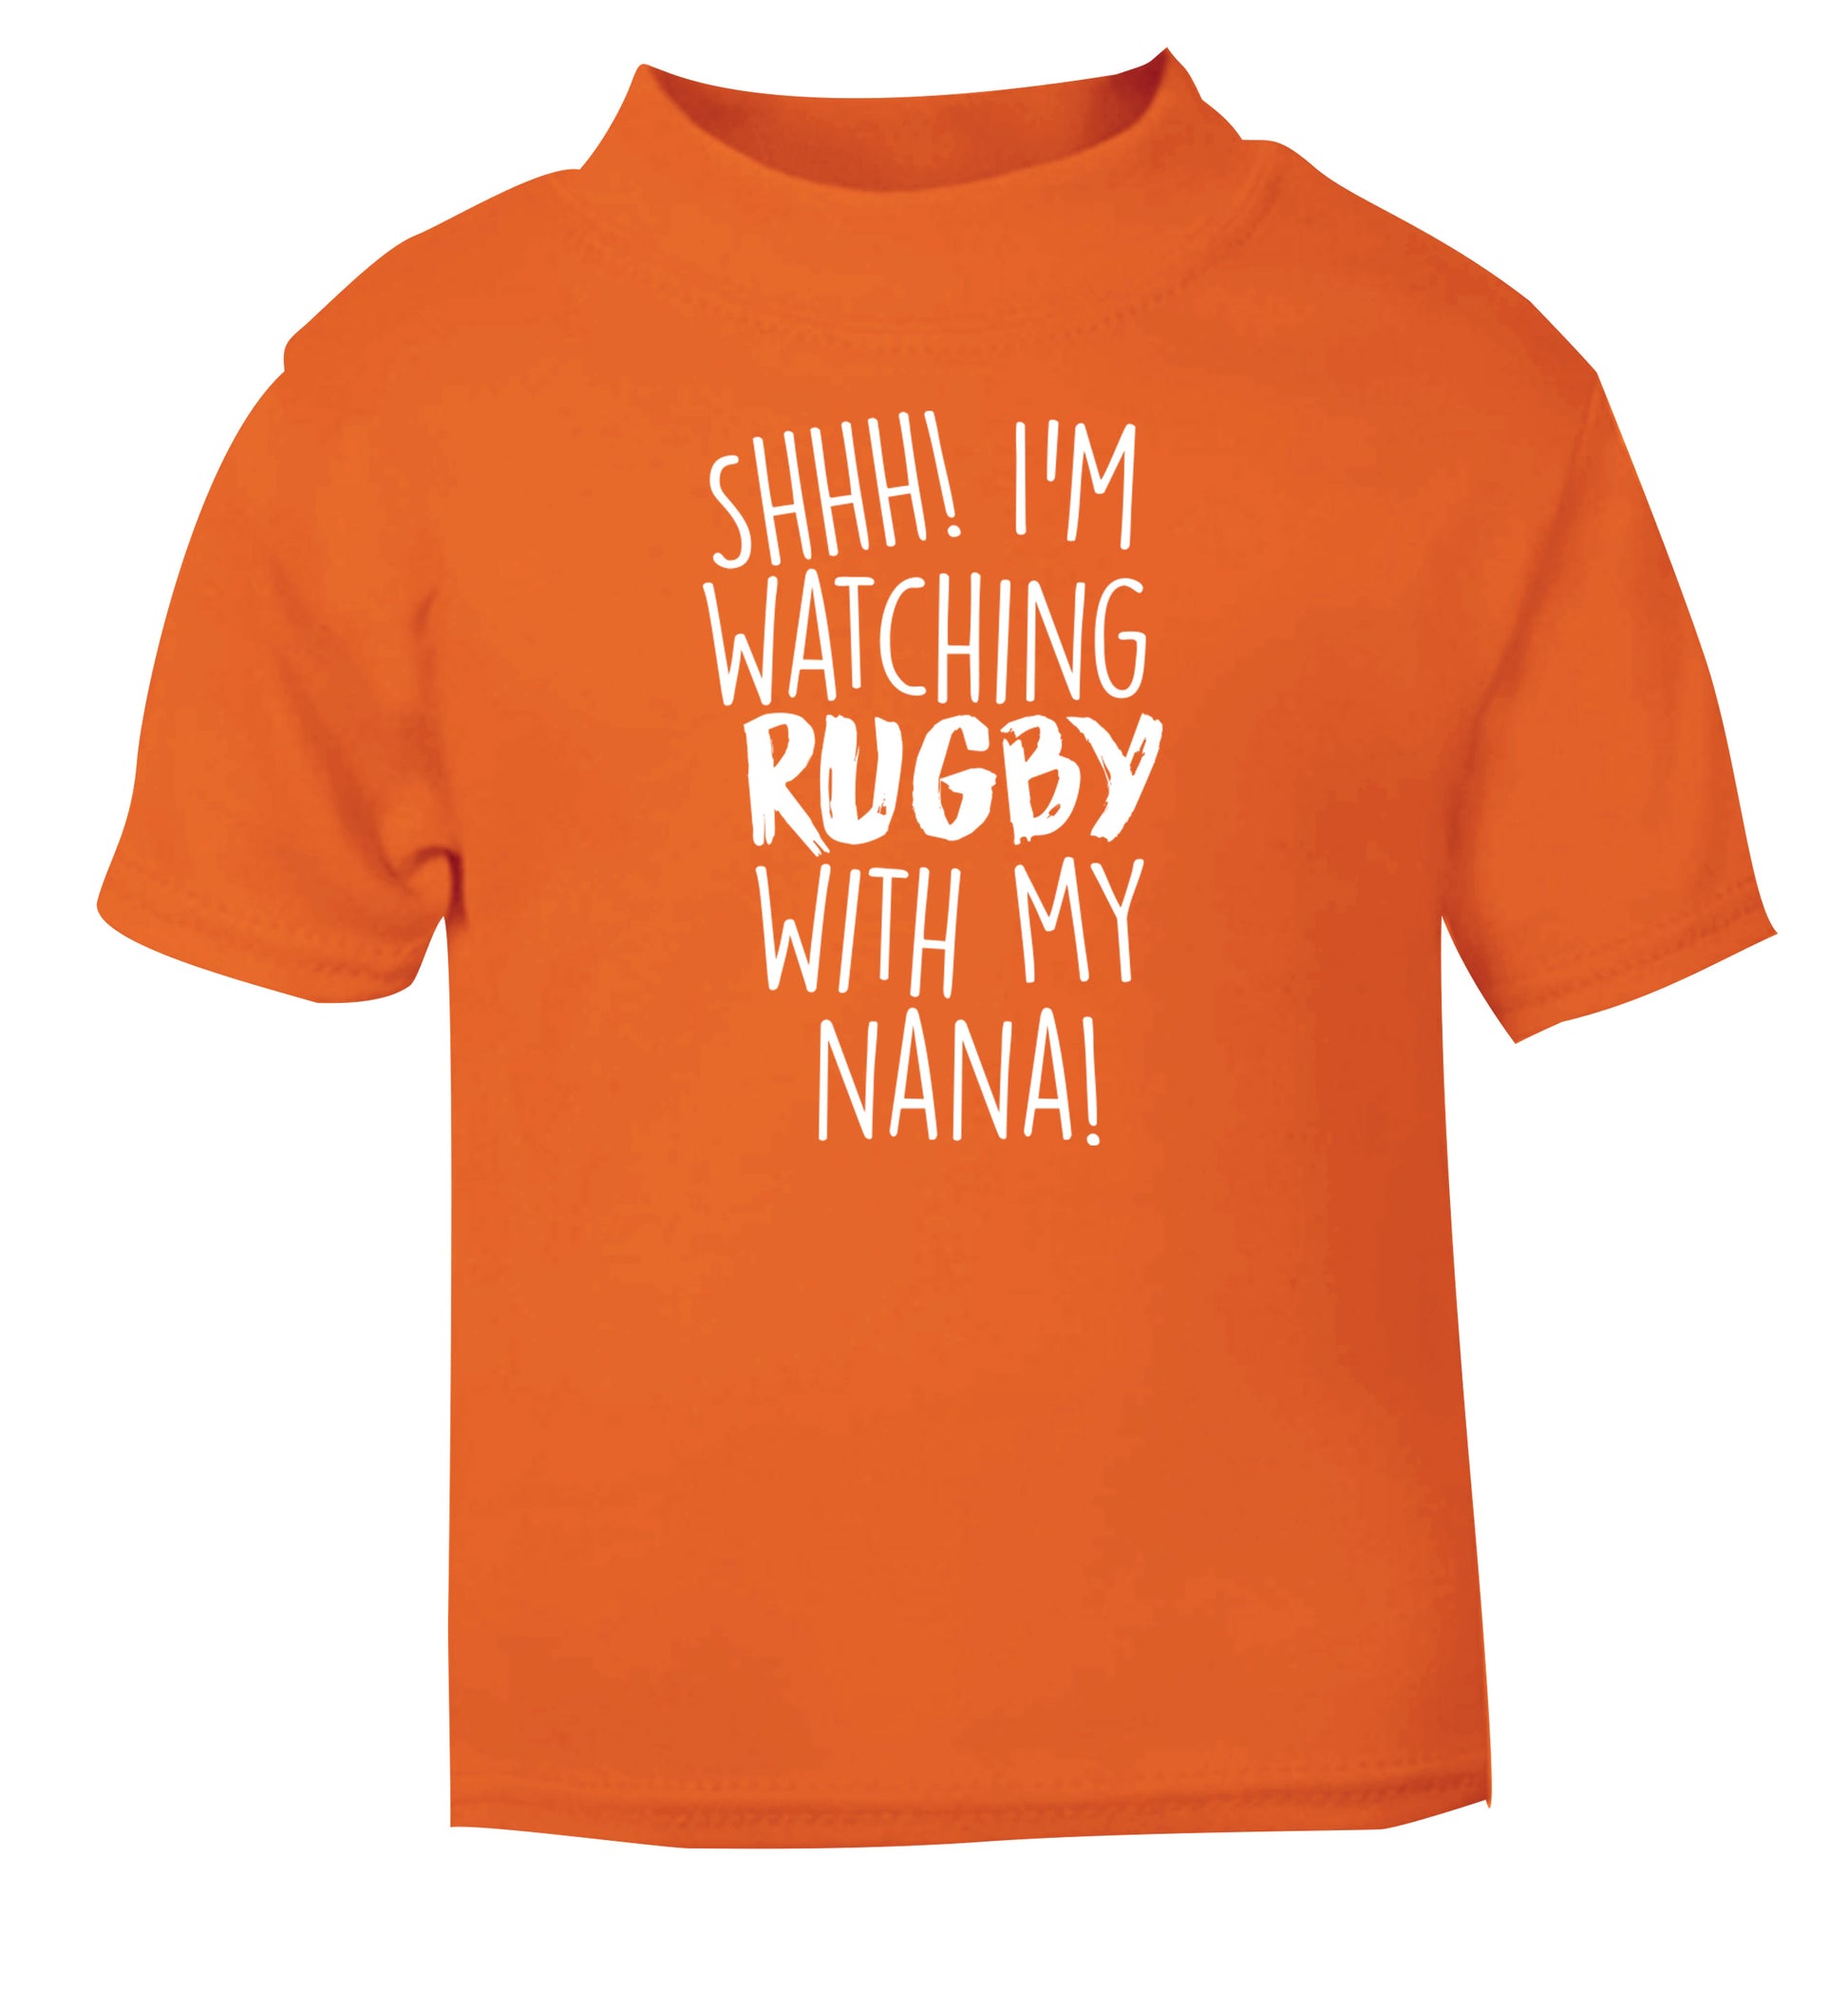 Shh I'm watching rugby with my nana orange Baby Toddler Tshirt 2 Years